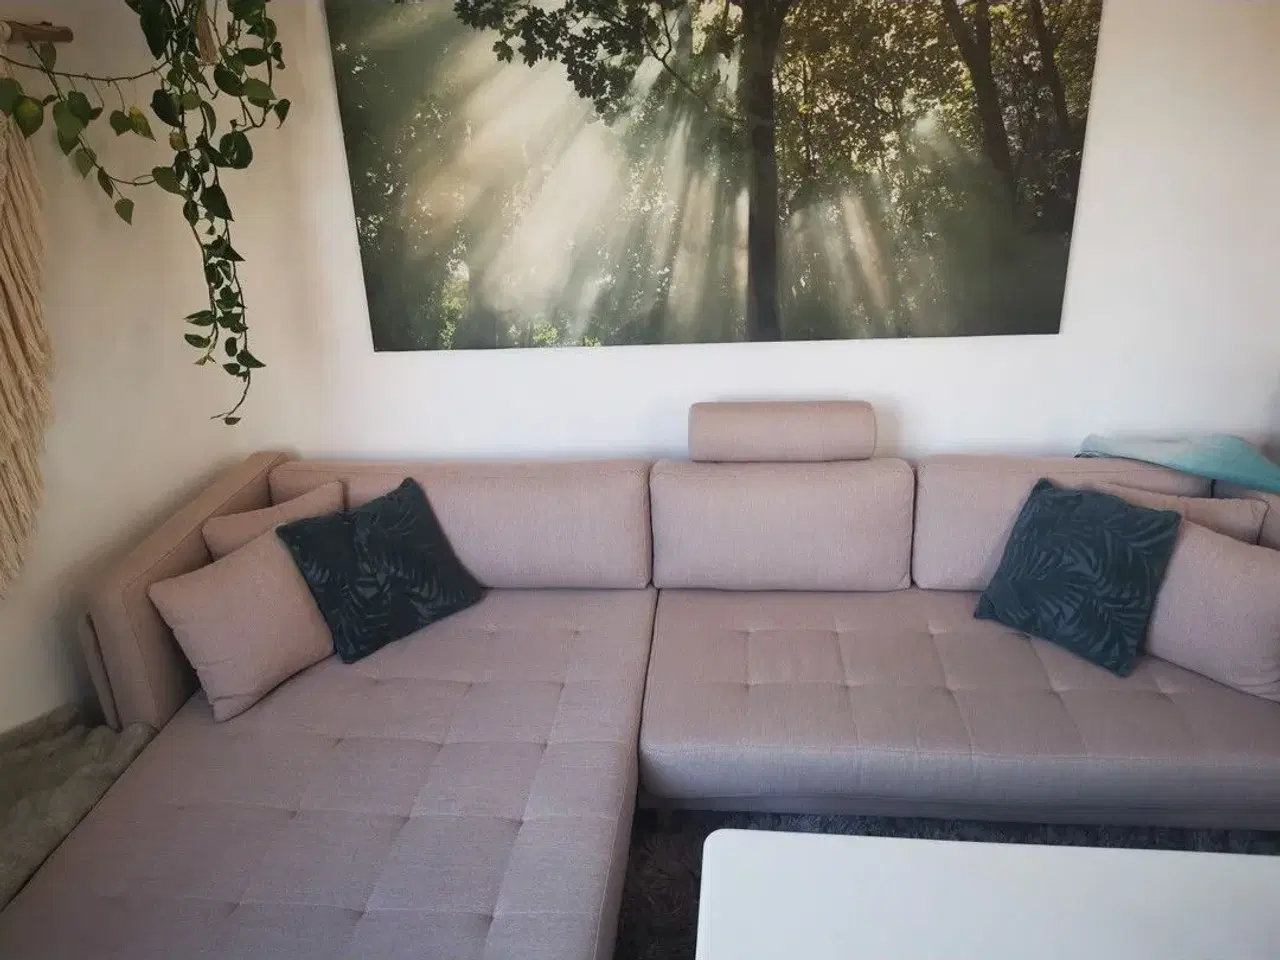 Billede 5 - Chaiselong sofa perfekt til de små kbh lejl 